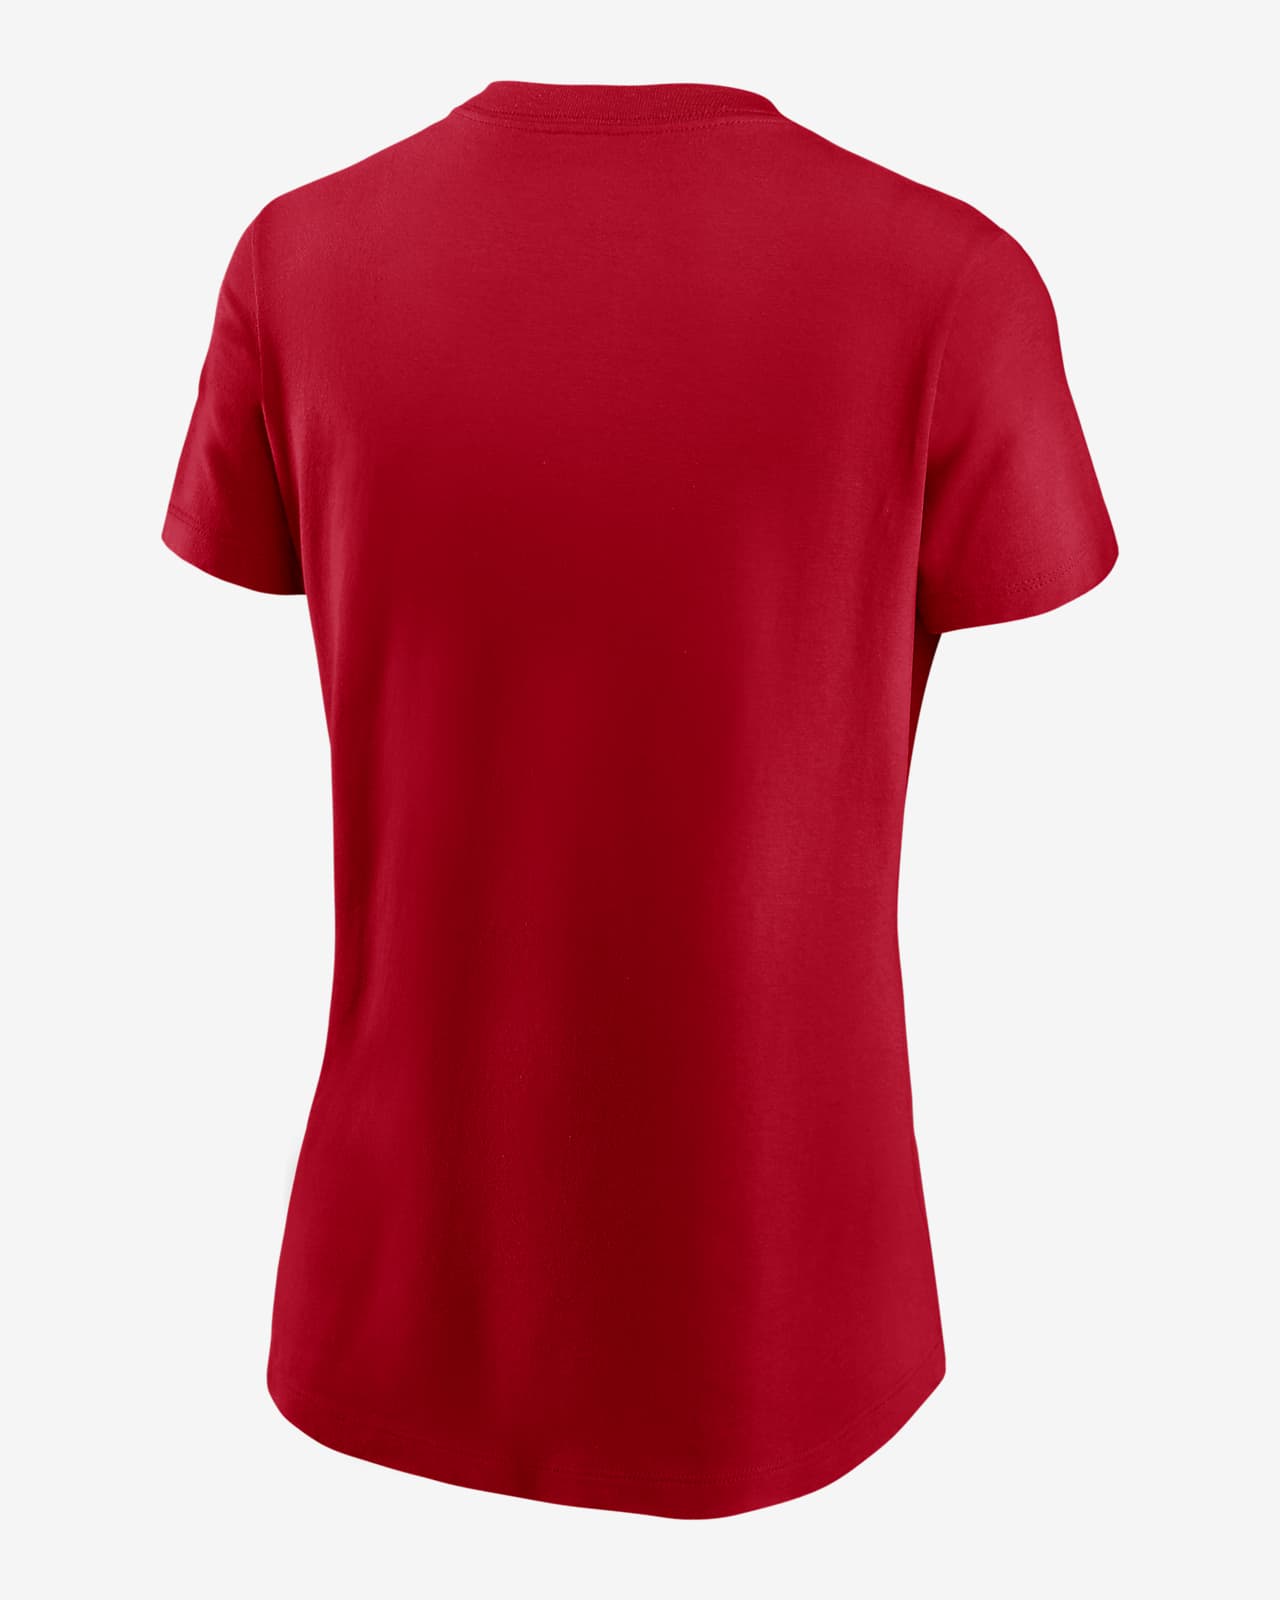 Nike Logo Essential (NFL Kansas City Chiefs) Women's T-Shirt